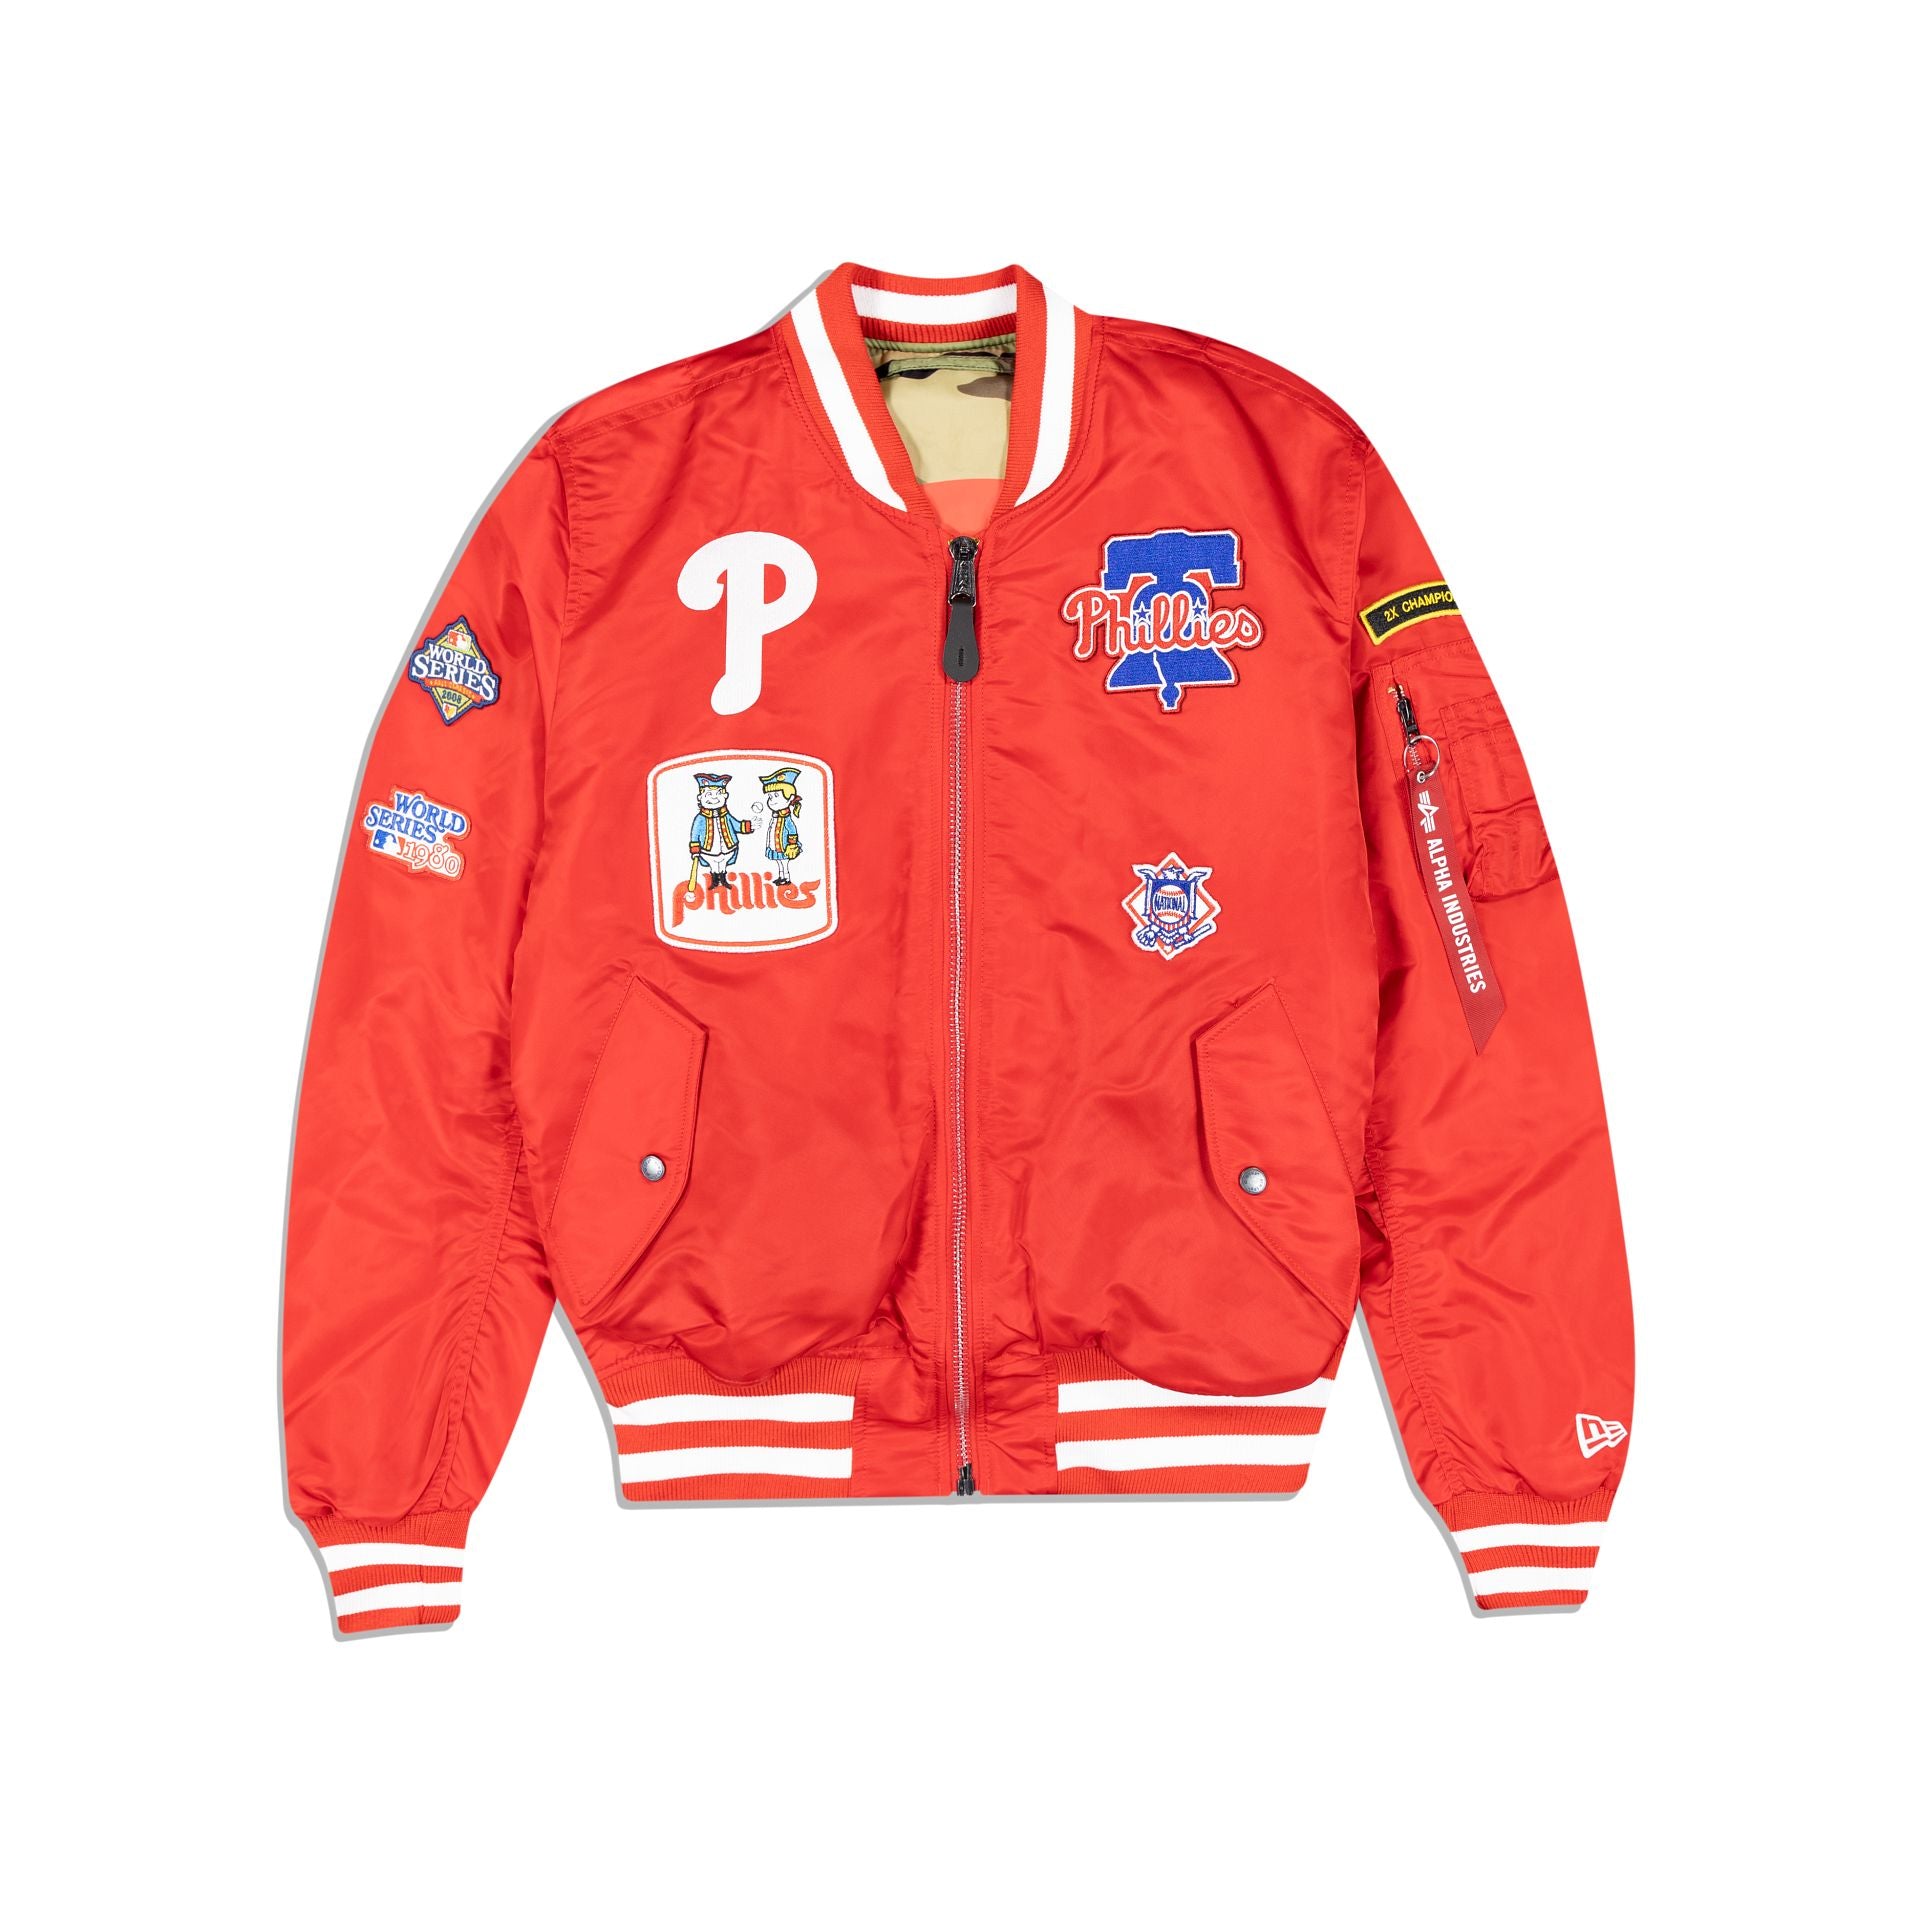 The Louisville slugger baseball jacket red authentic vintage